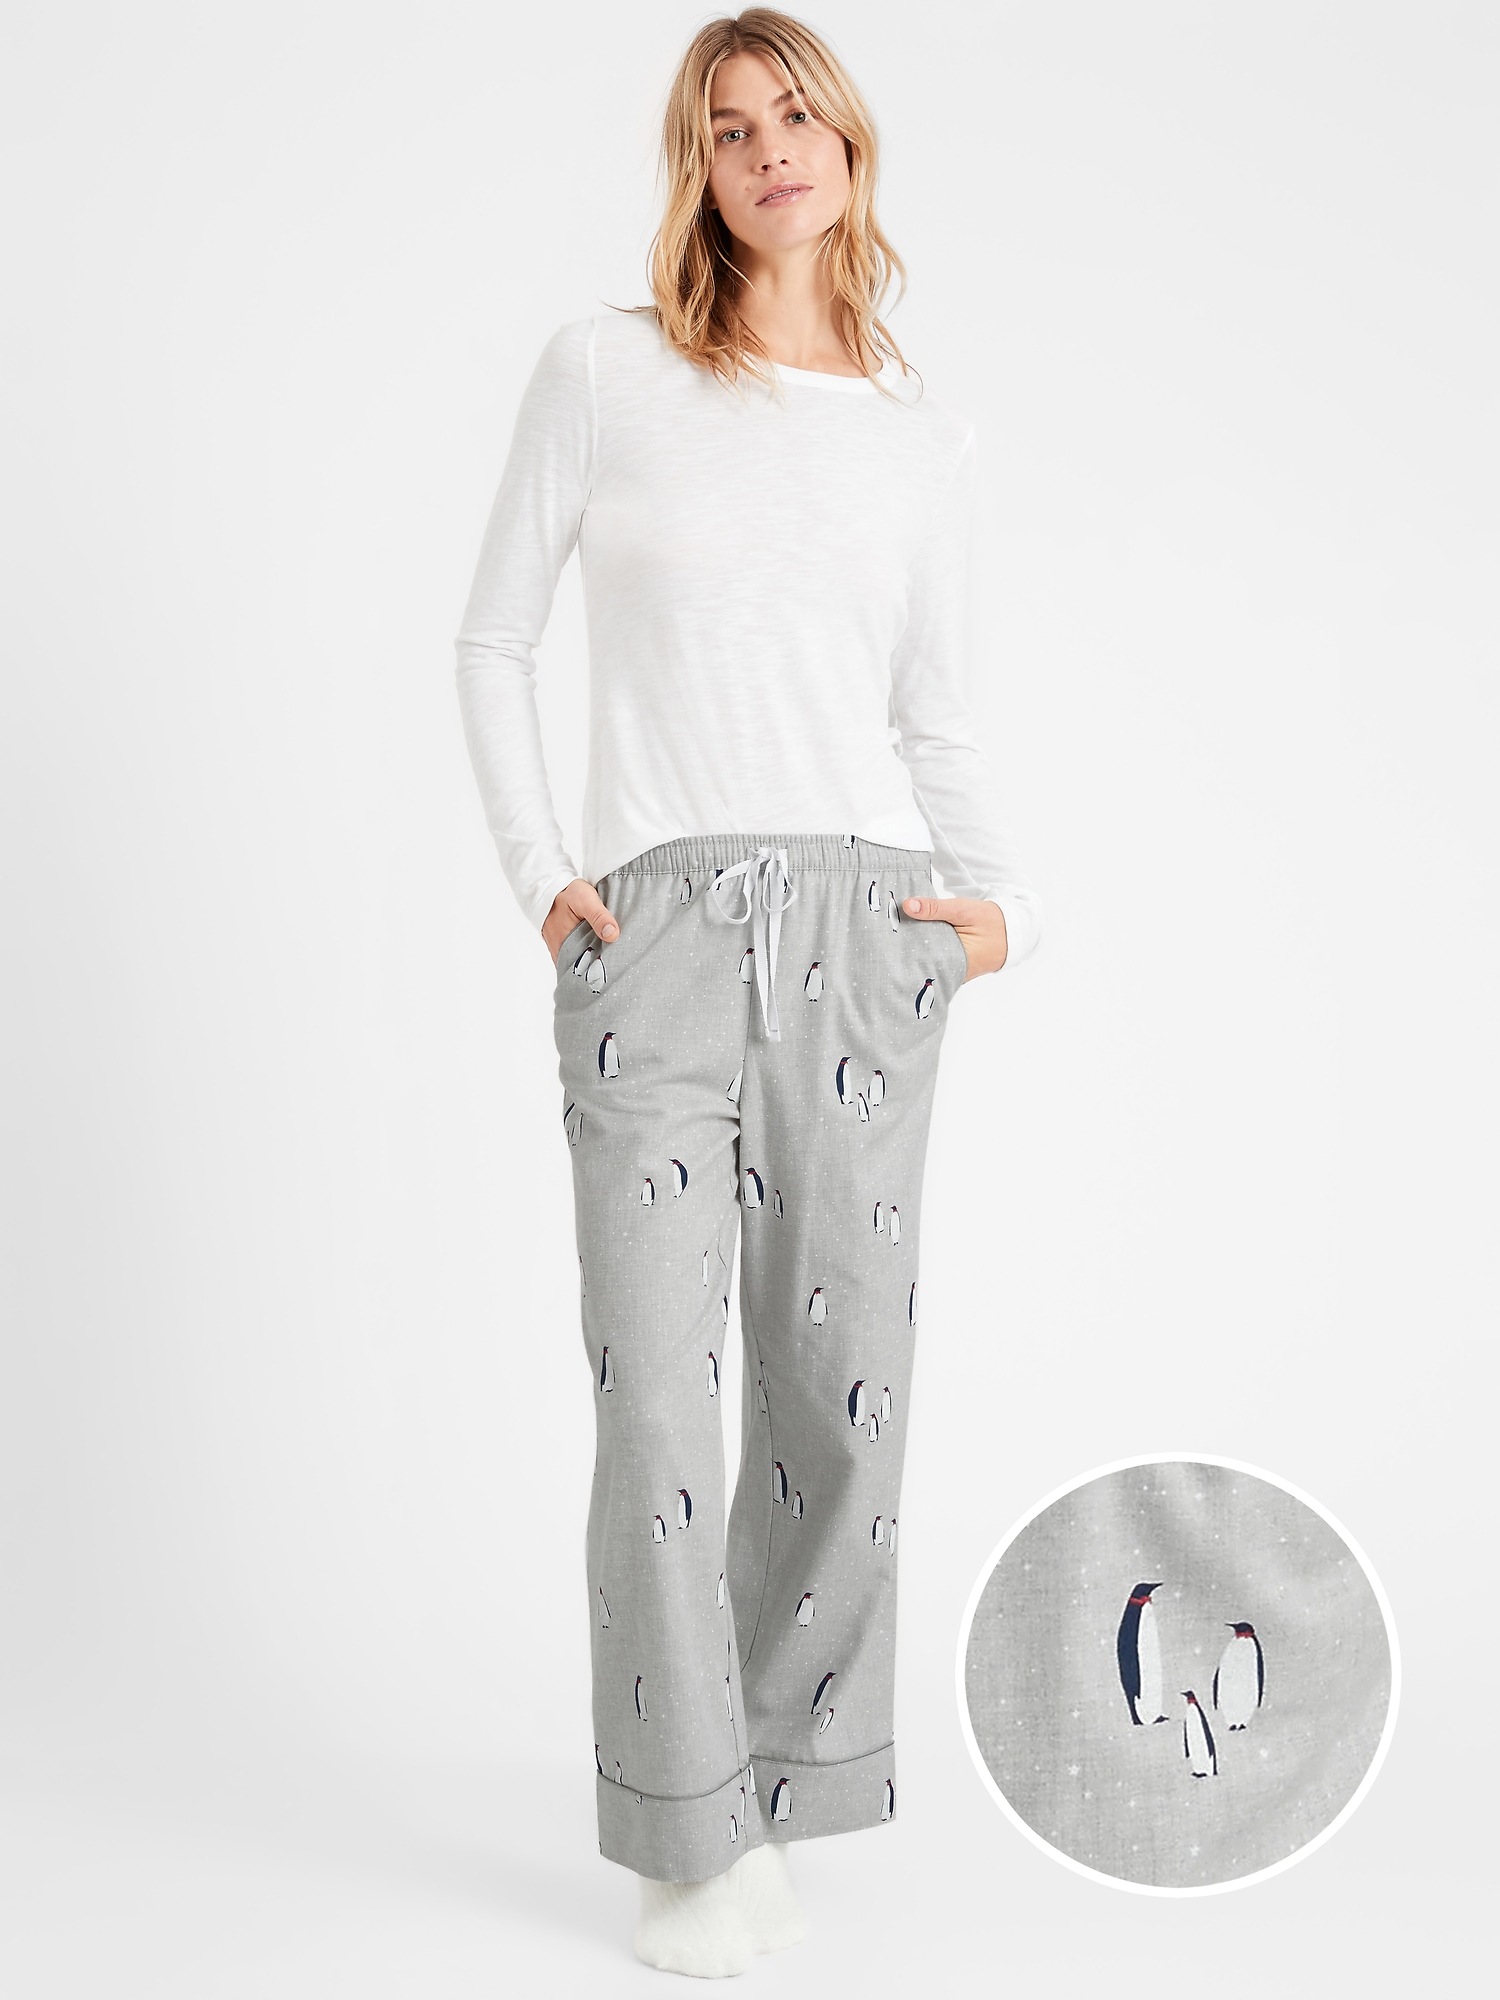 Flannel Pajama Pant